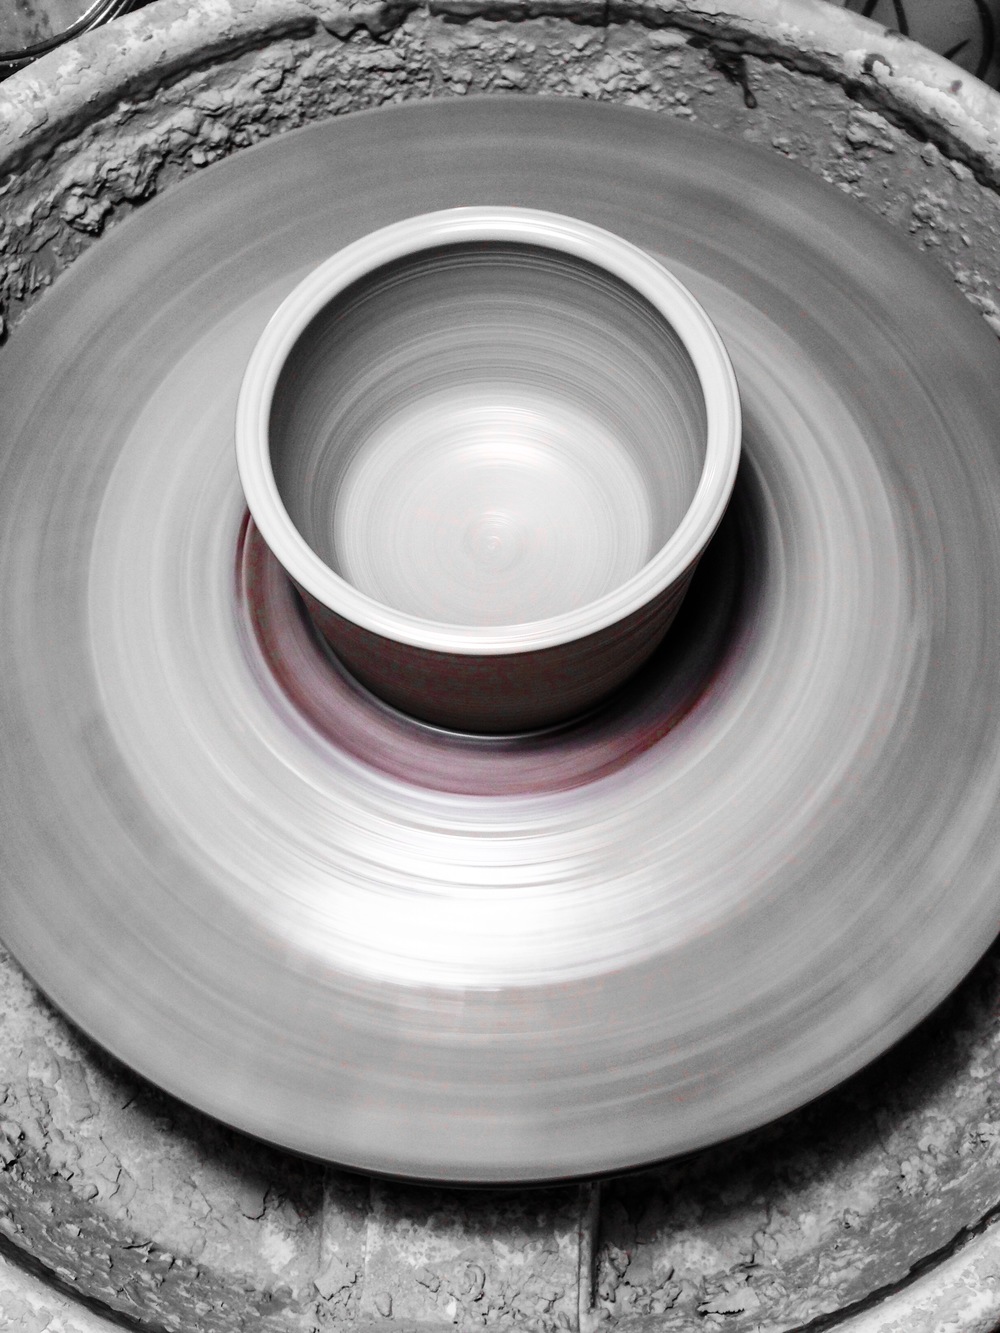 Making a porcelain bowl